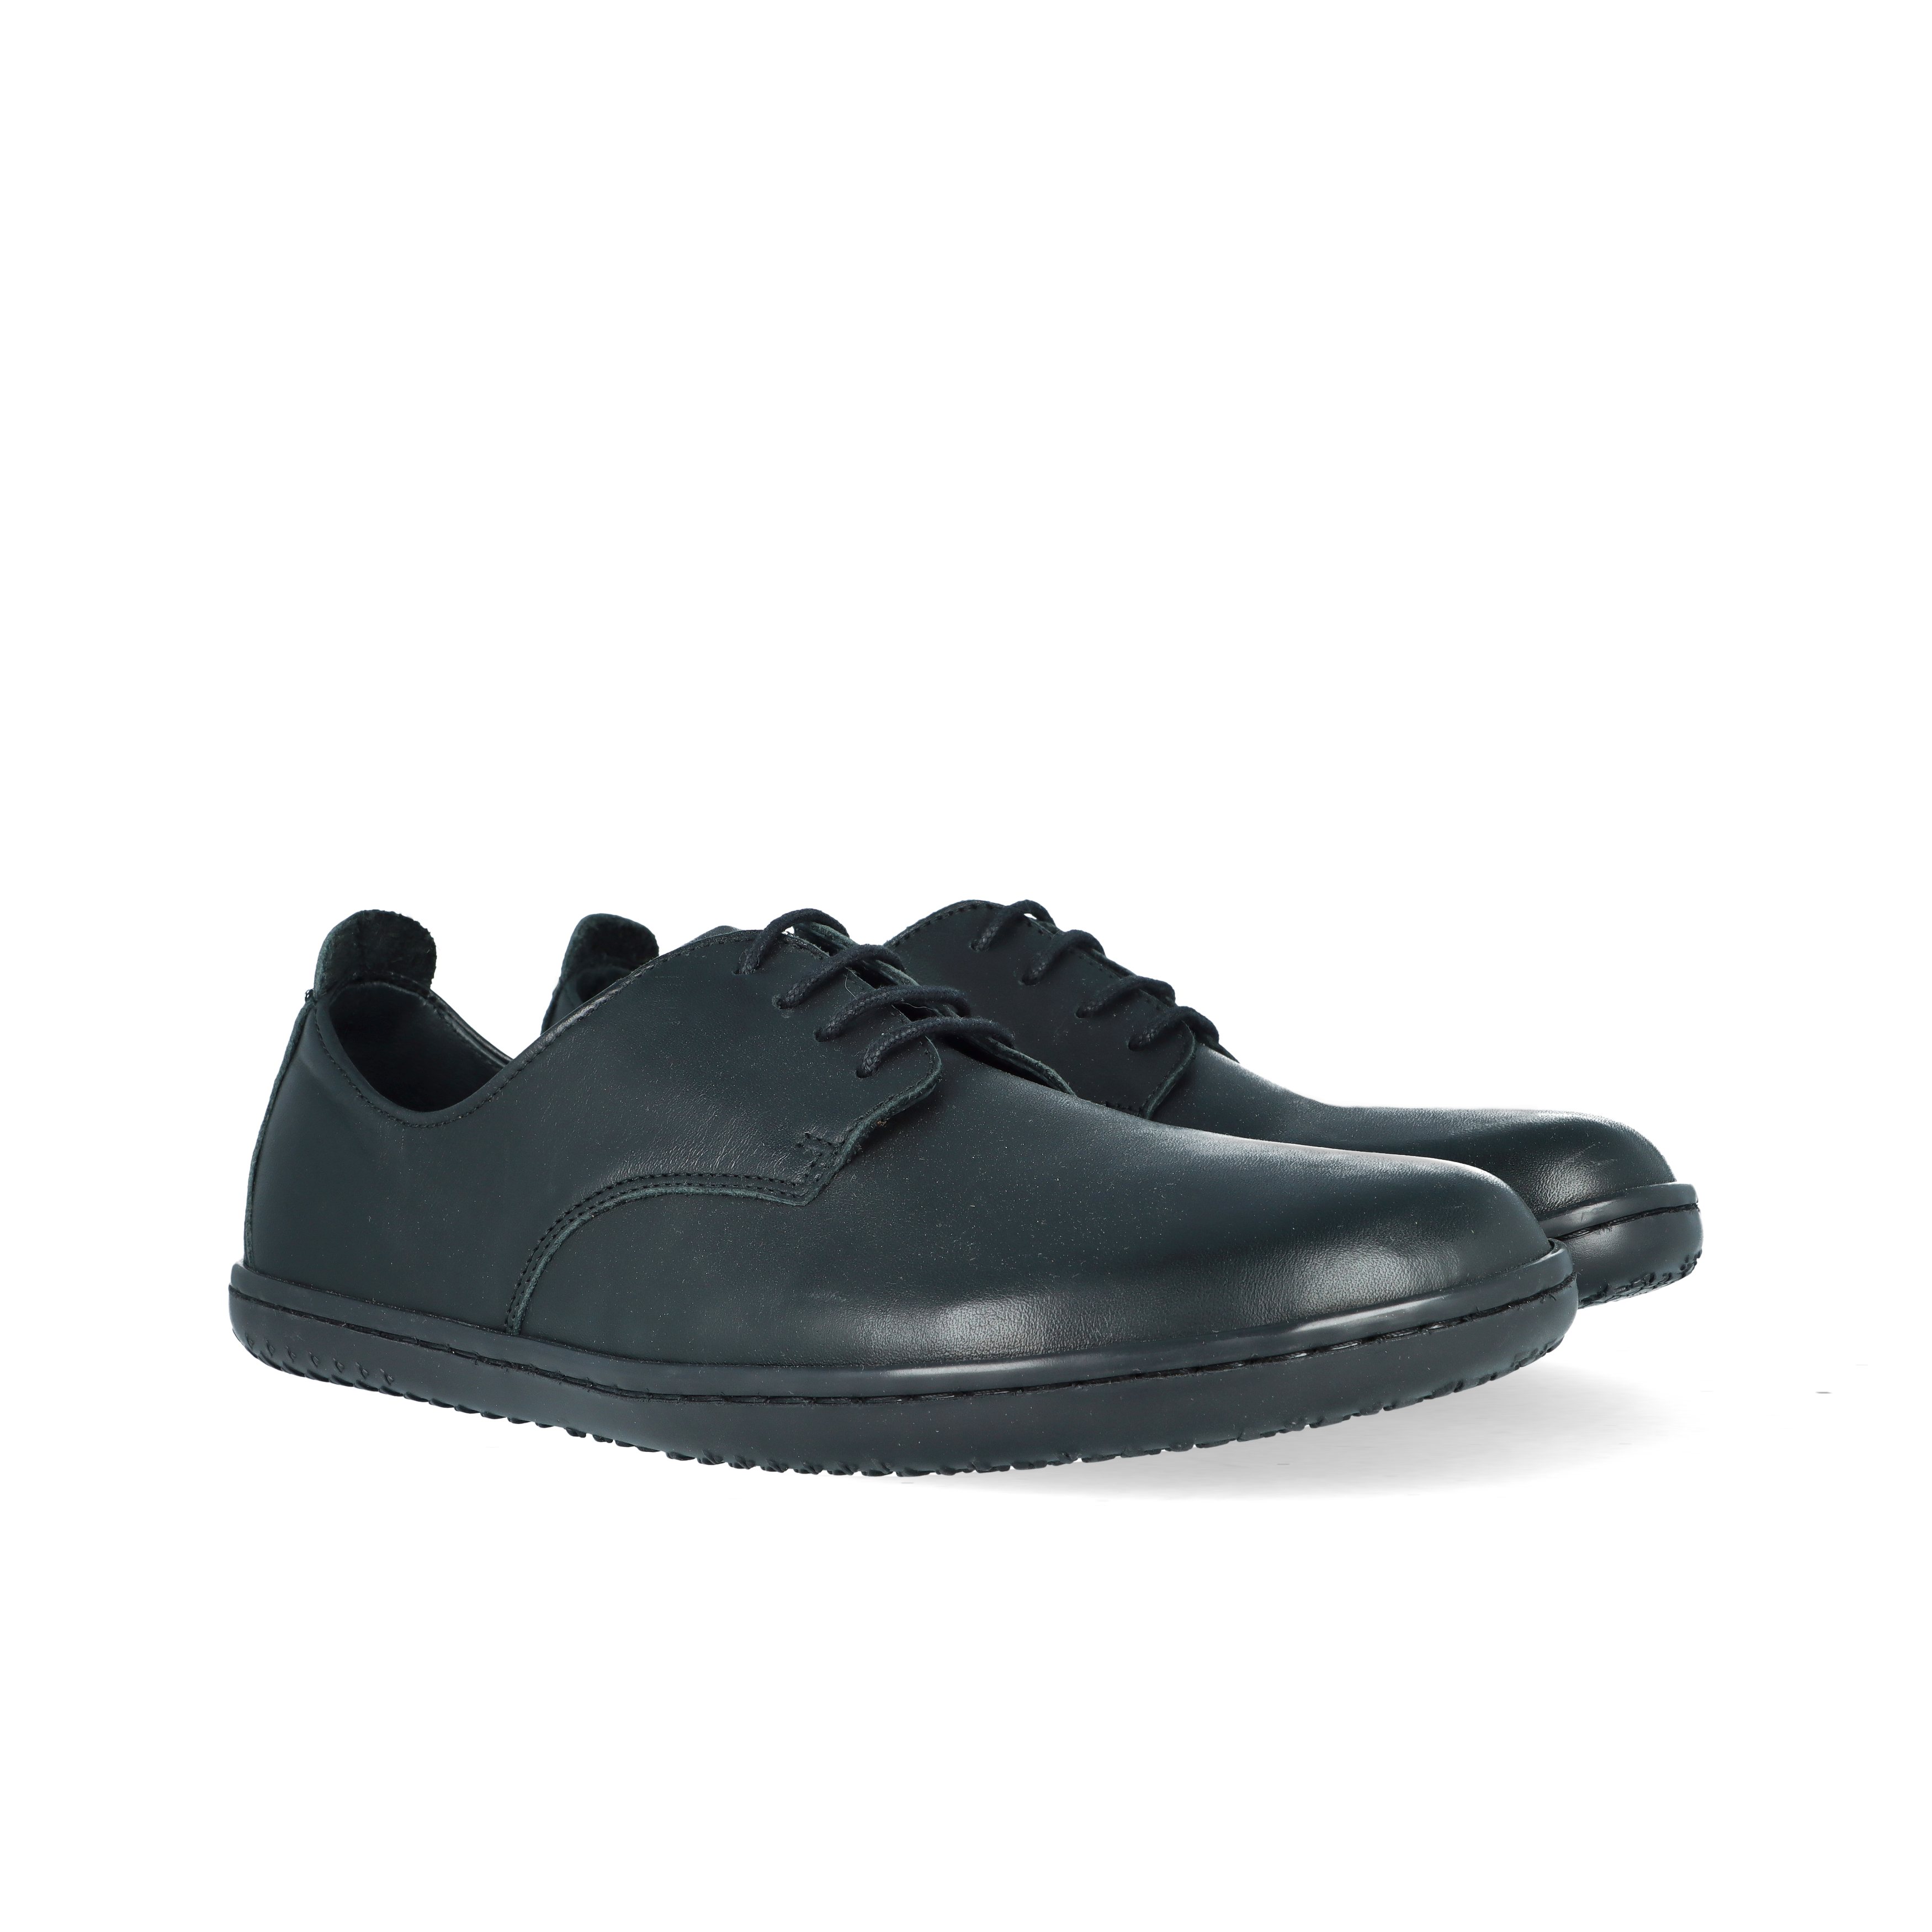 Angles Fashion - Chronos black - Zapatos barefoot – Cacles Barefoot